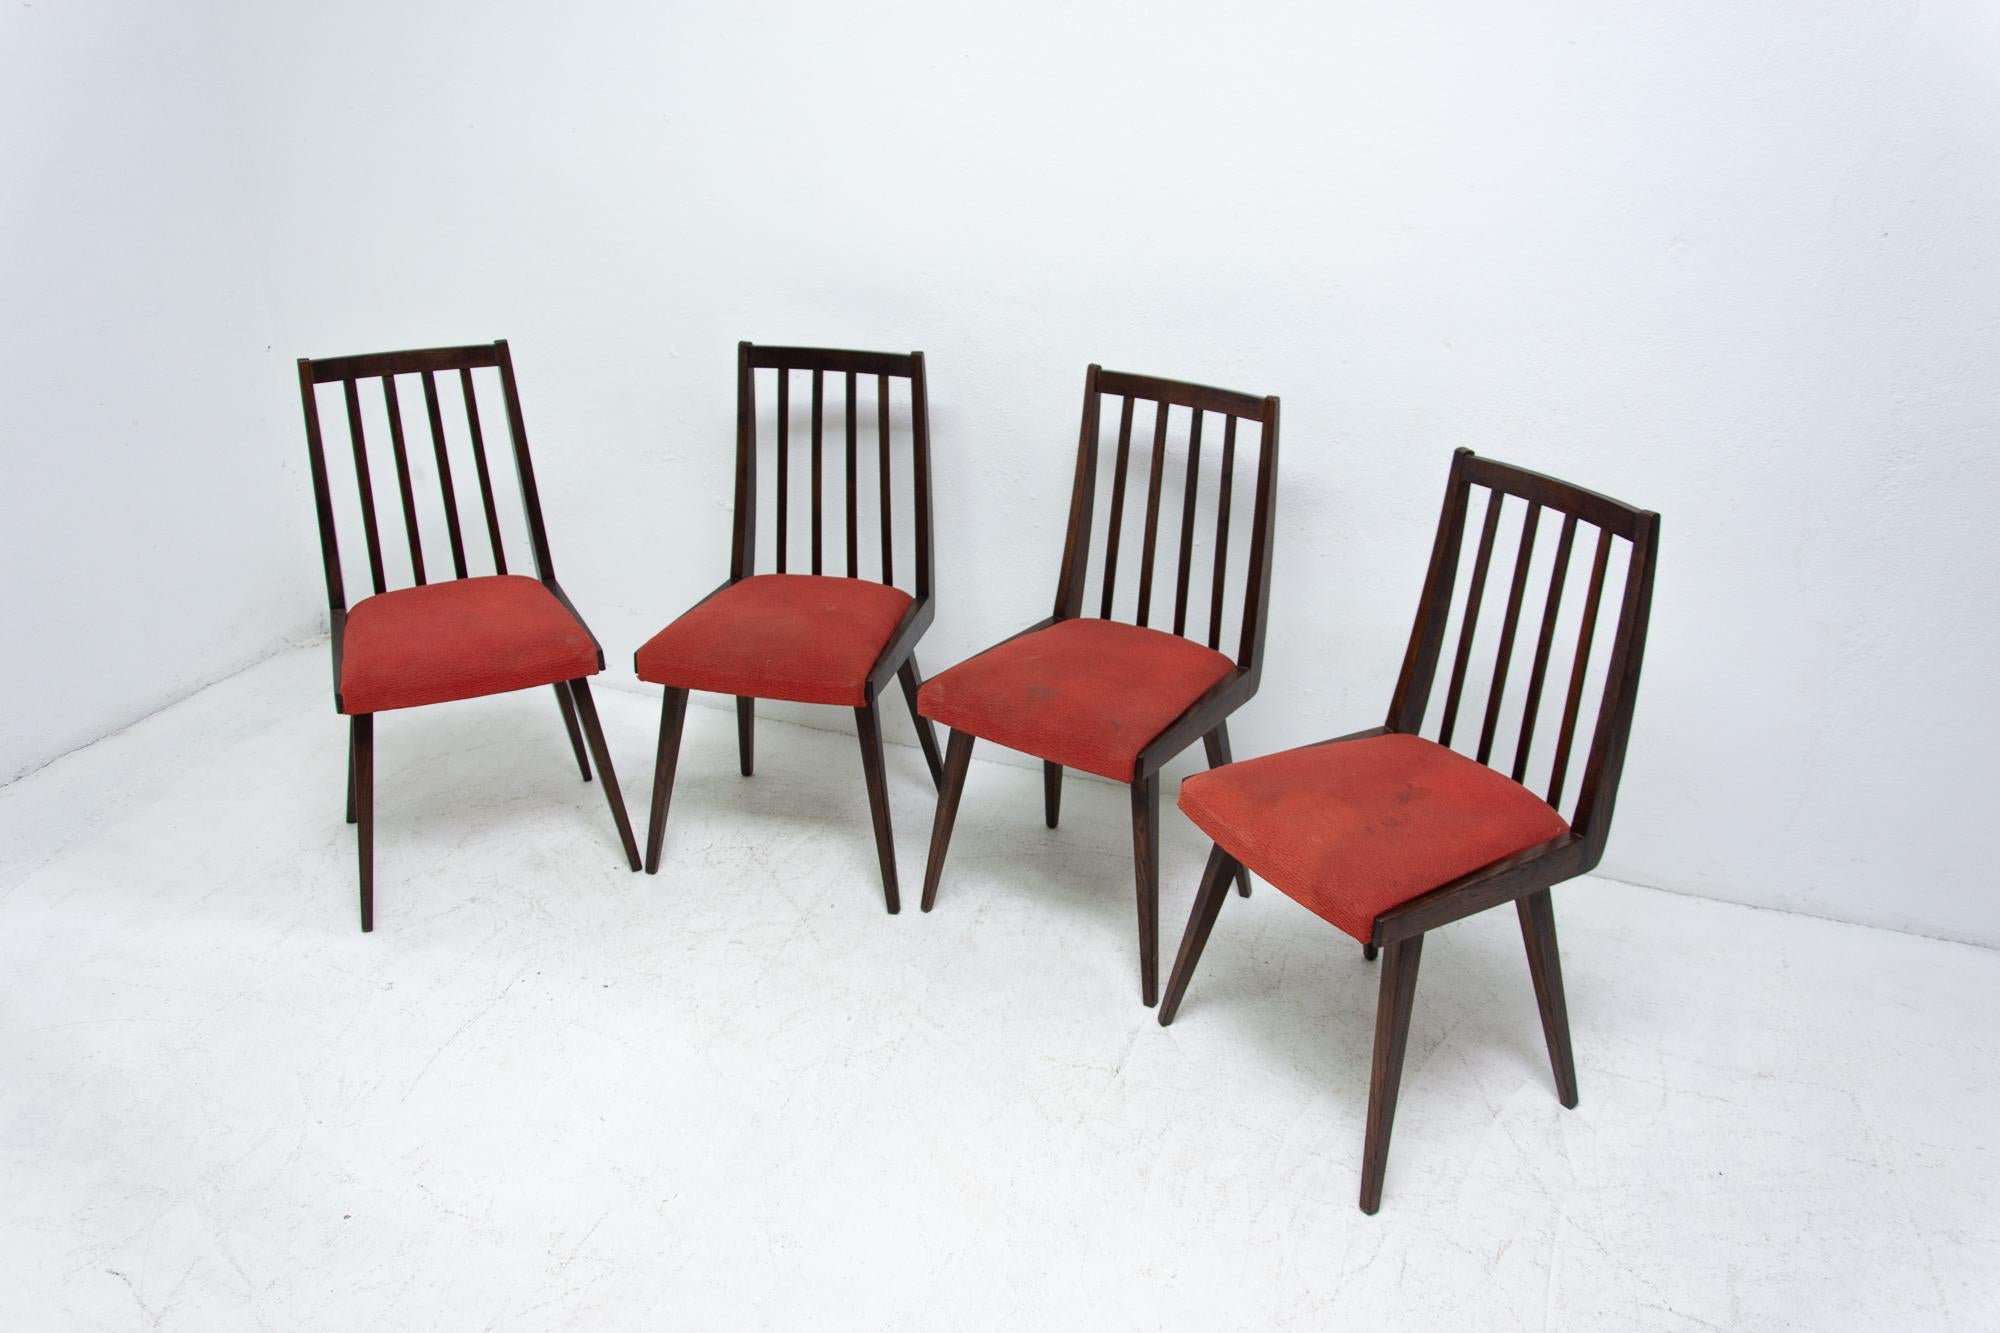 Czech Midcentury Dining Chairs by Jiří Jiroutek for Interiér Praha, 1960s For Sale